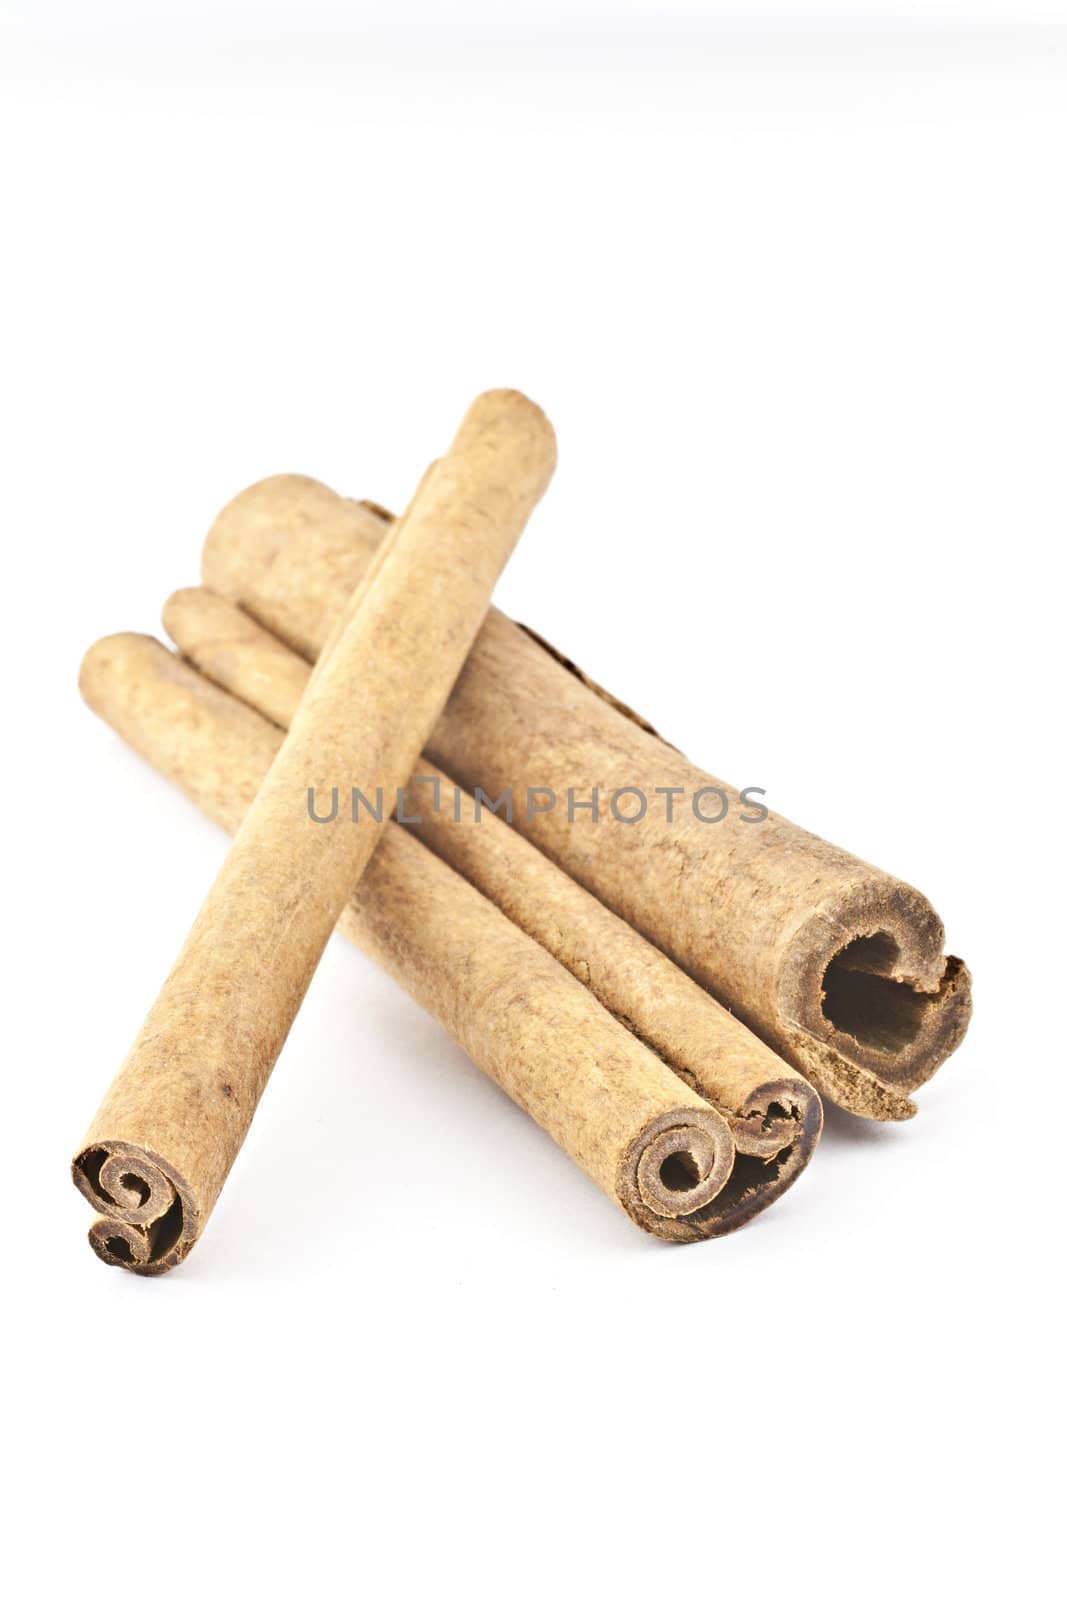 Three cinnamon sticks on a white background. Macro photography.
